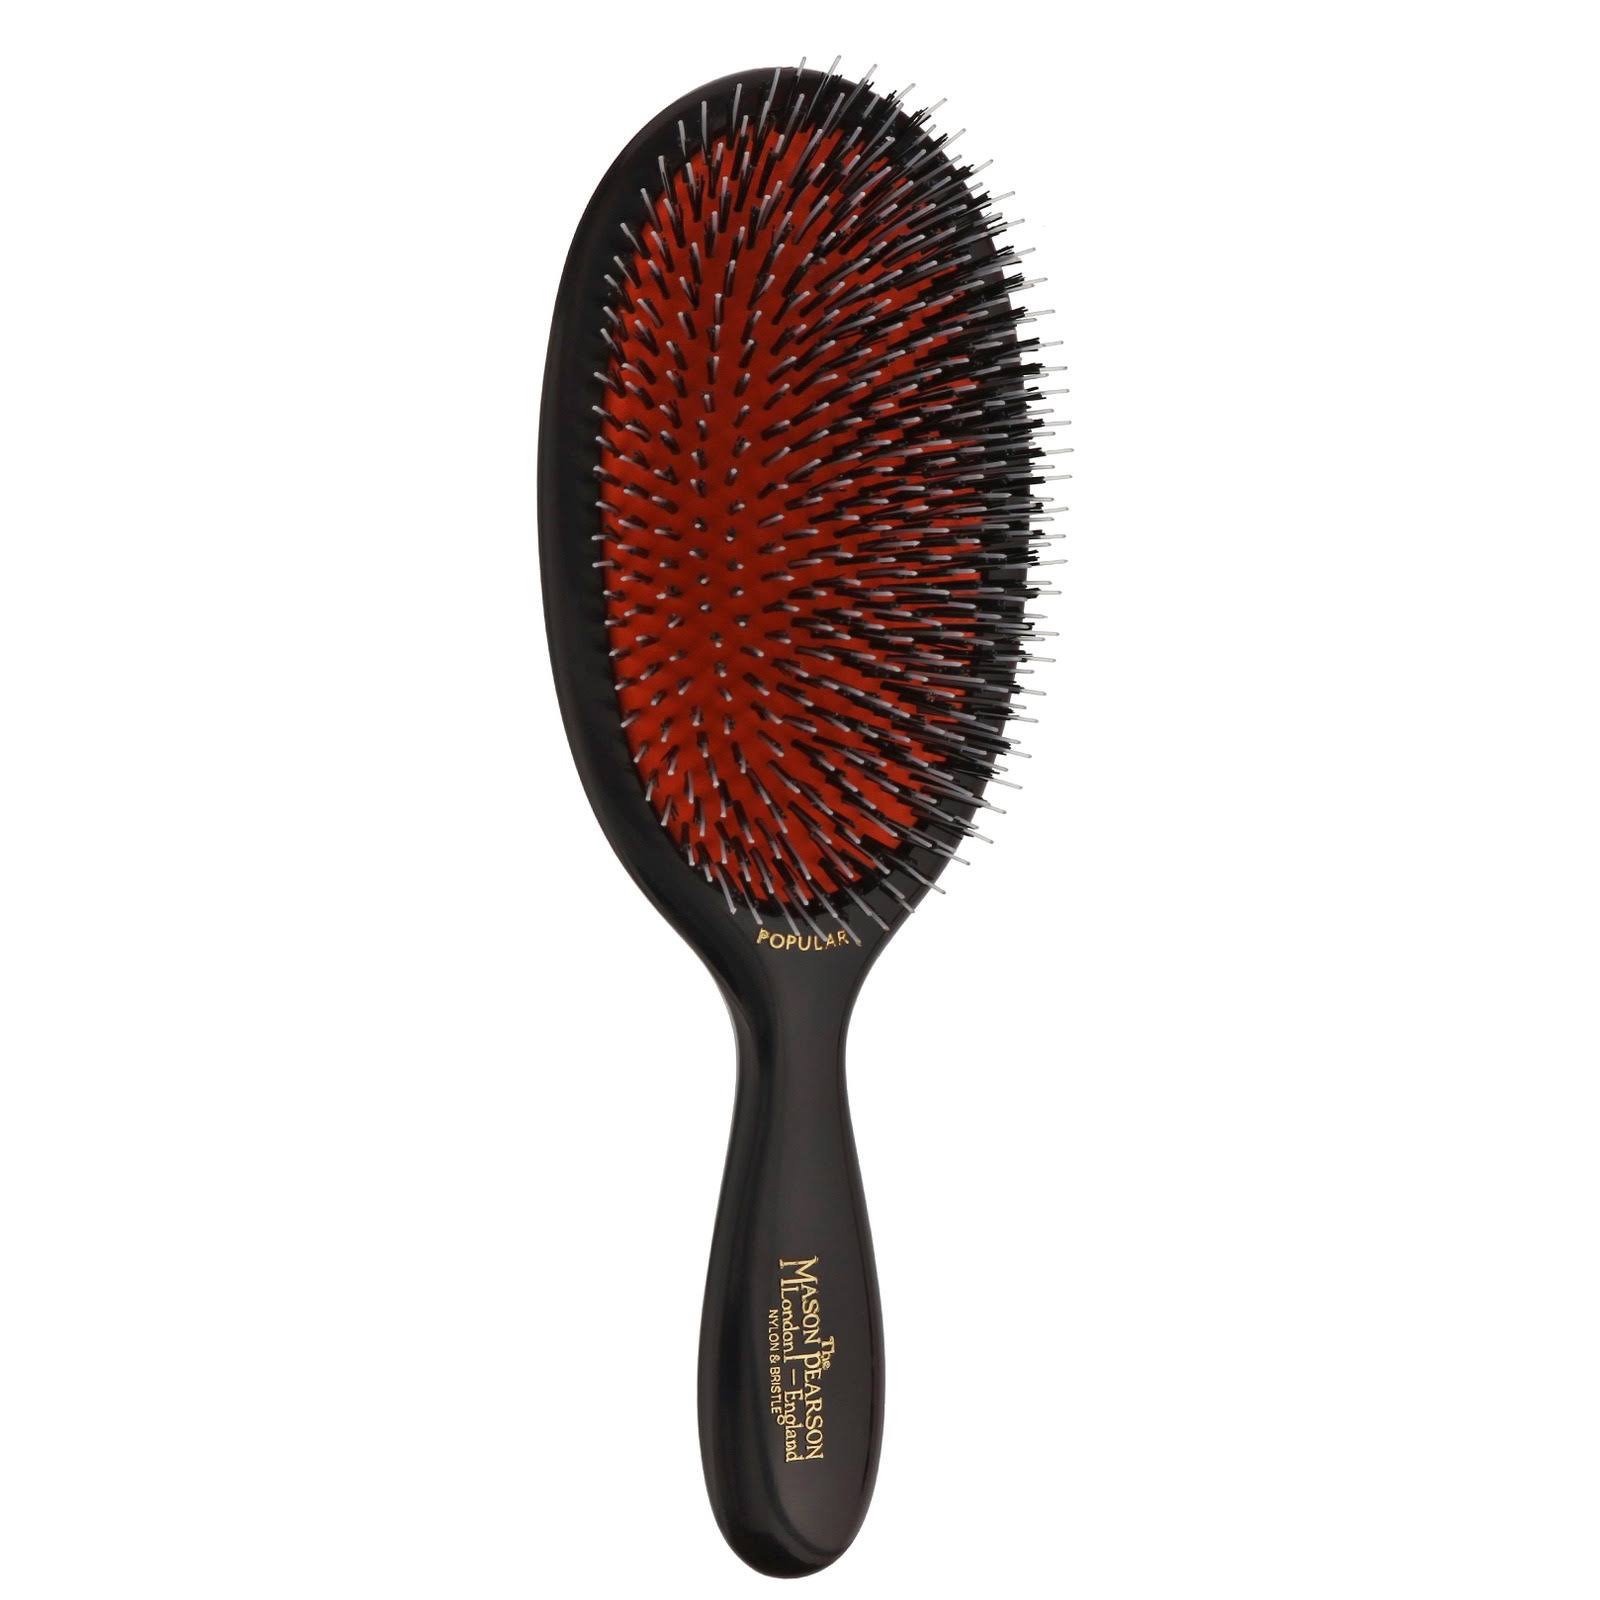 Mason Pearson Popular Mixture Hair Brush